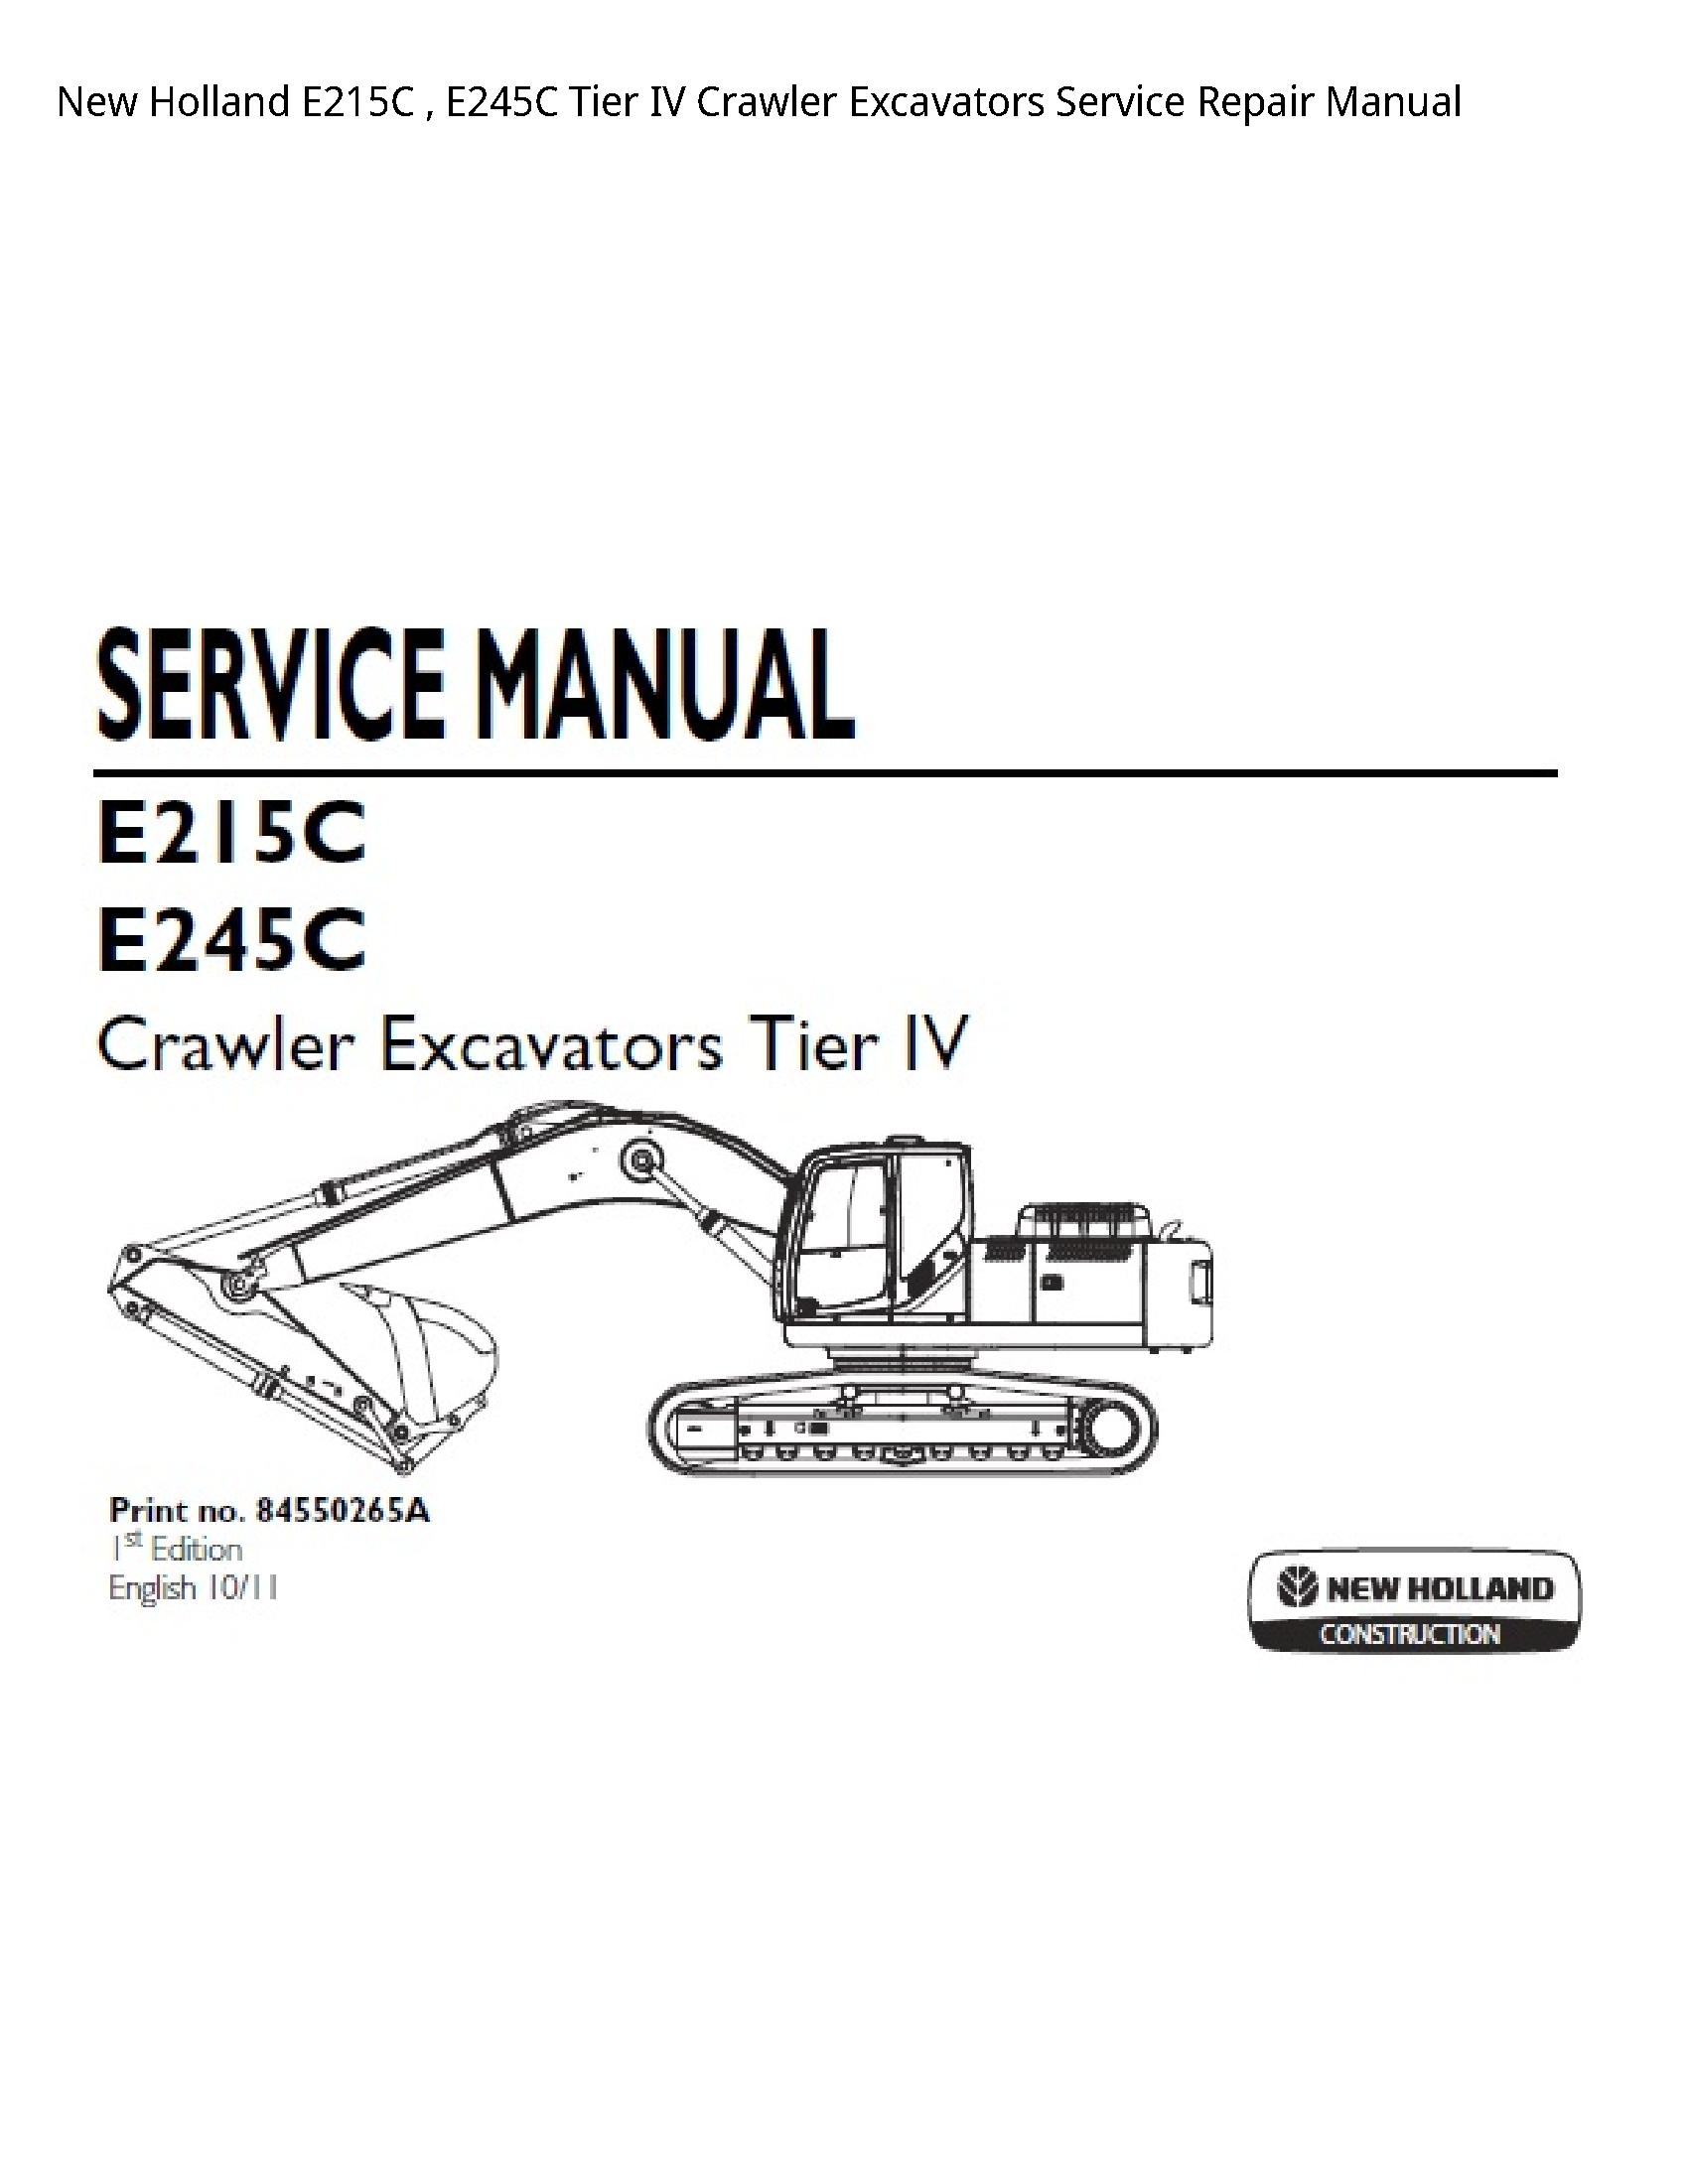 New Holland E215C Tier IV Crawler Excavators manual